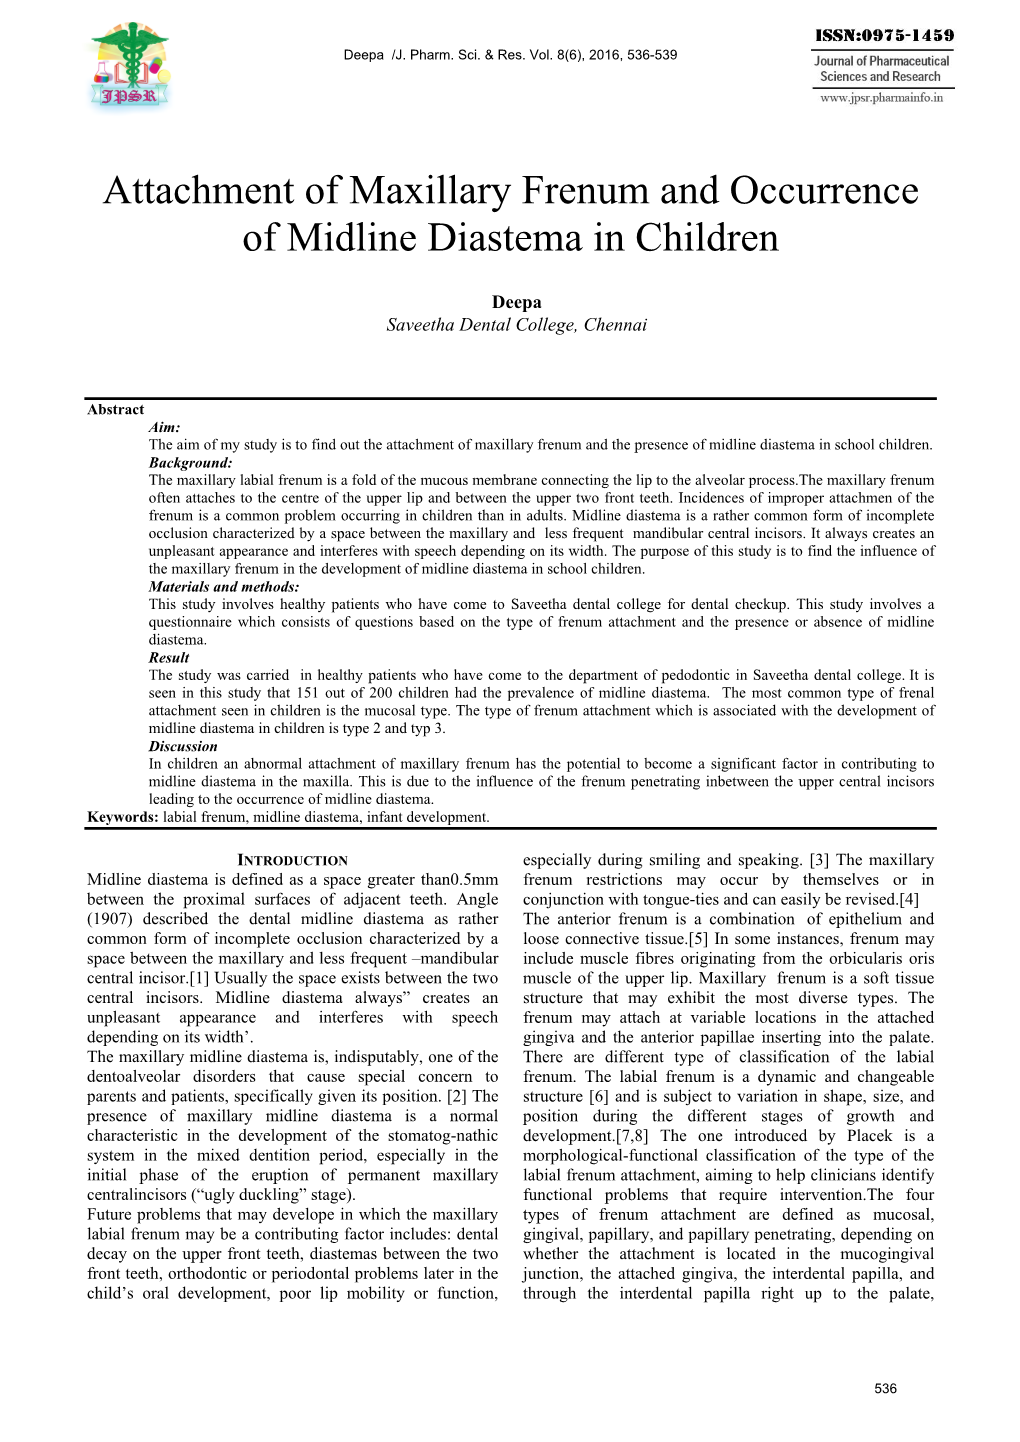 Attachment of Maxillary Frenum and Occurrence of Midline Diastema in Children